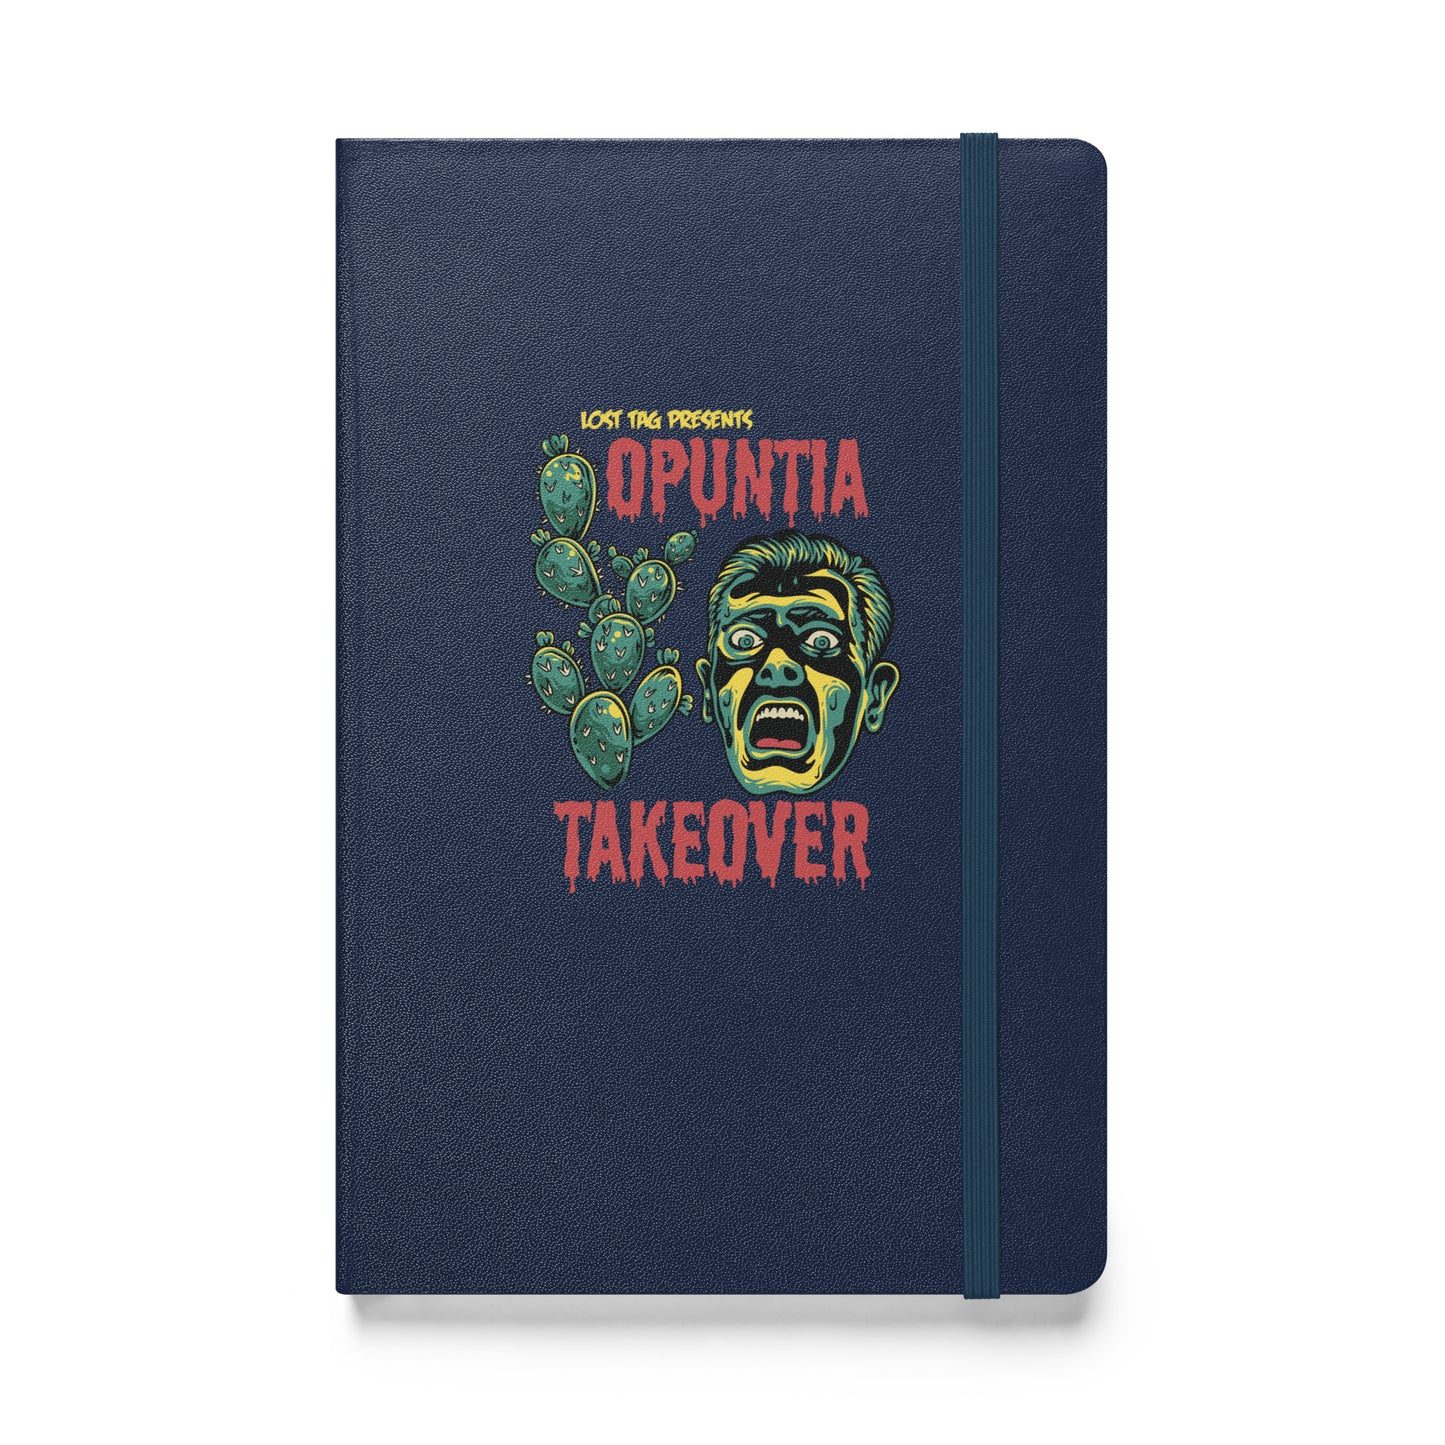 Opuntia Hardcover bound notebook